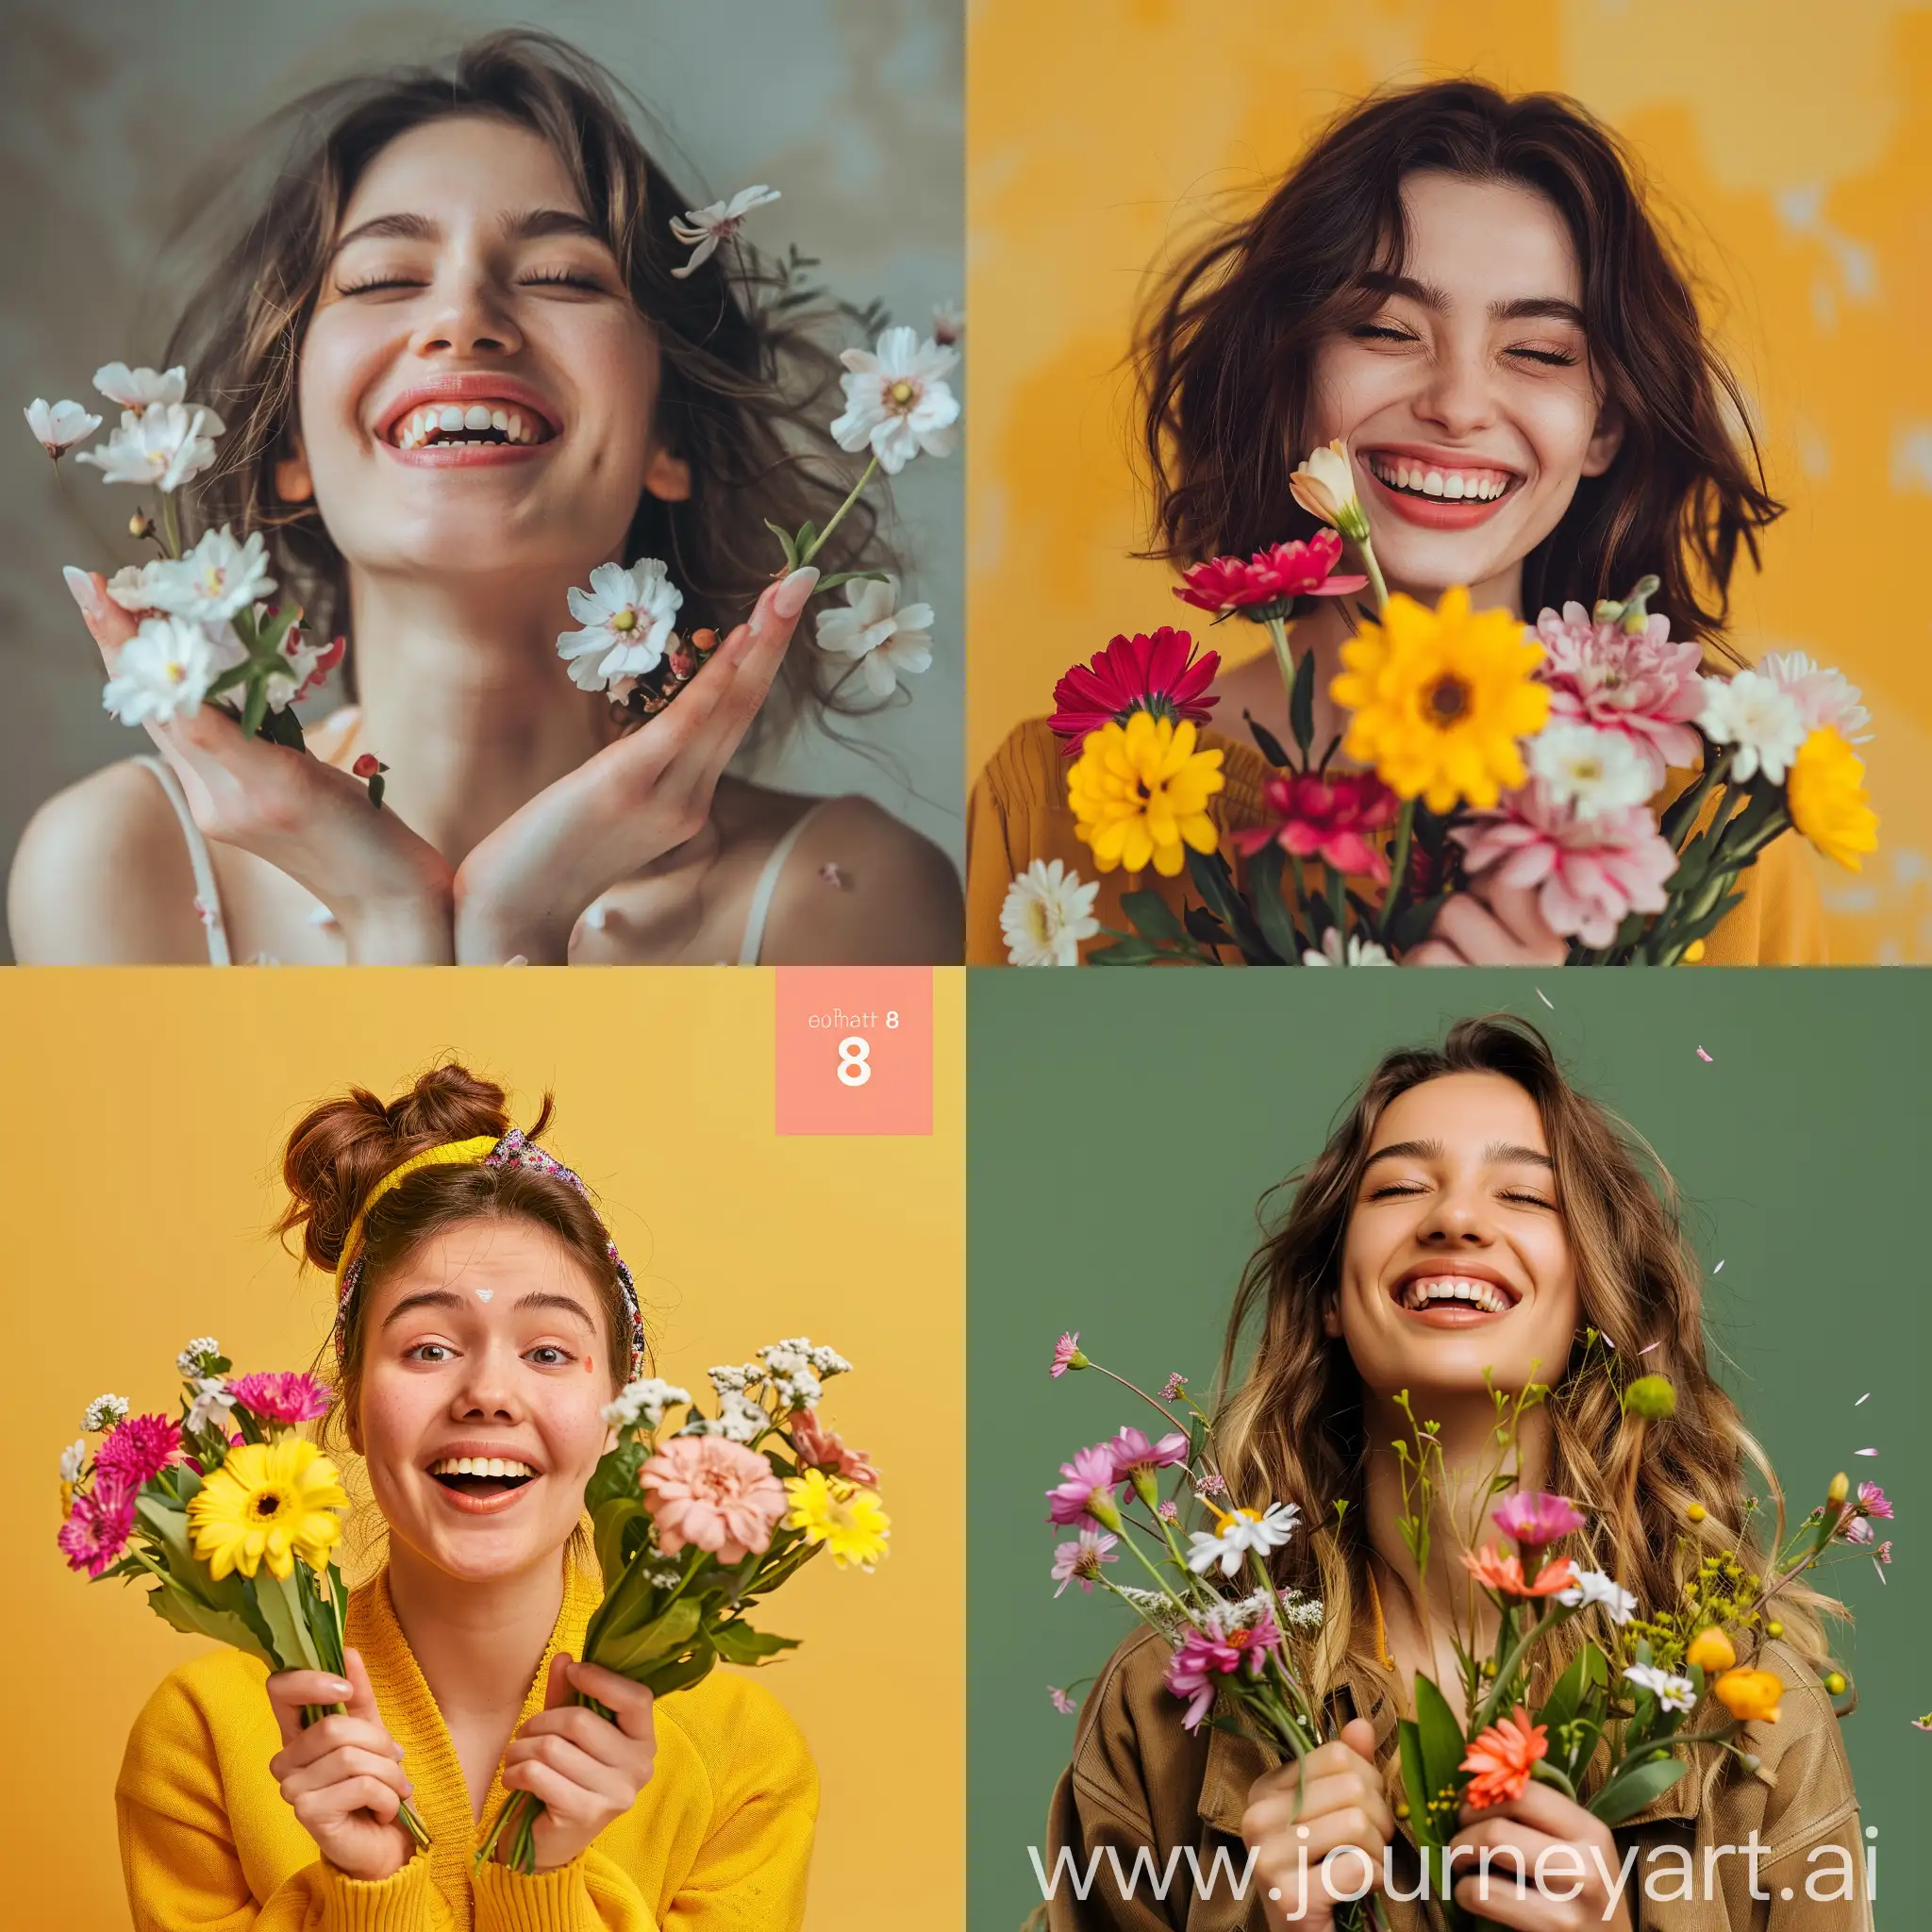 Celebrating-International-Womens-Day-with-Joyful-Woman-Holding-Flowers